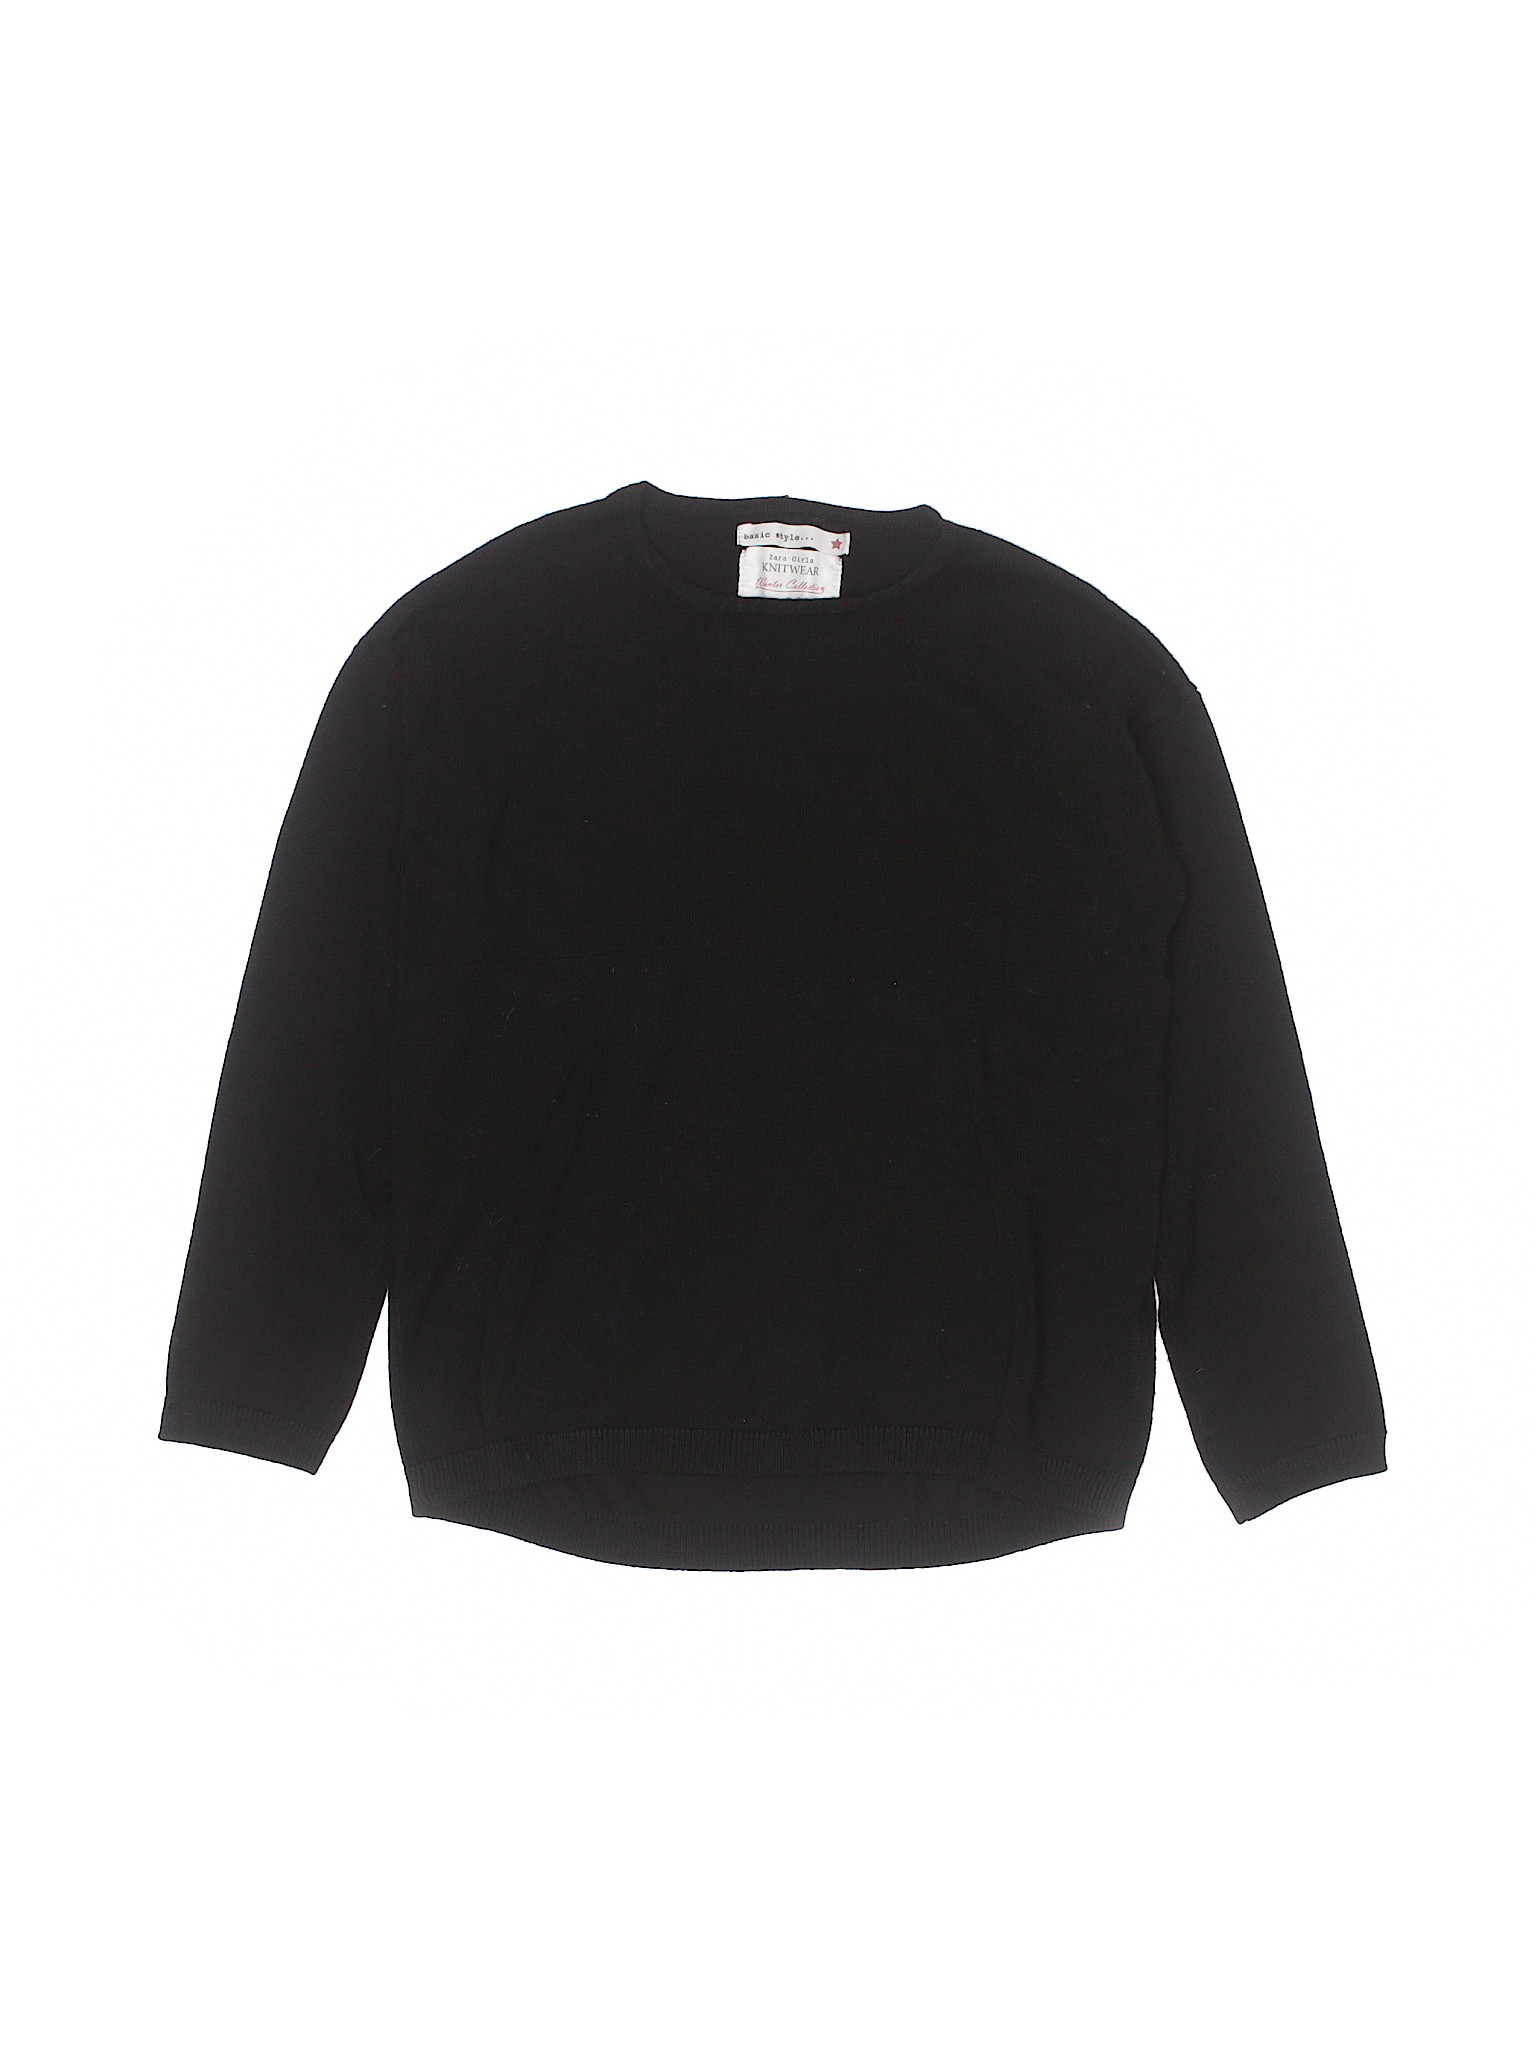 Zara Girls Black Pullover Sweater 7 | eBay